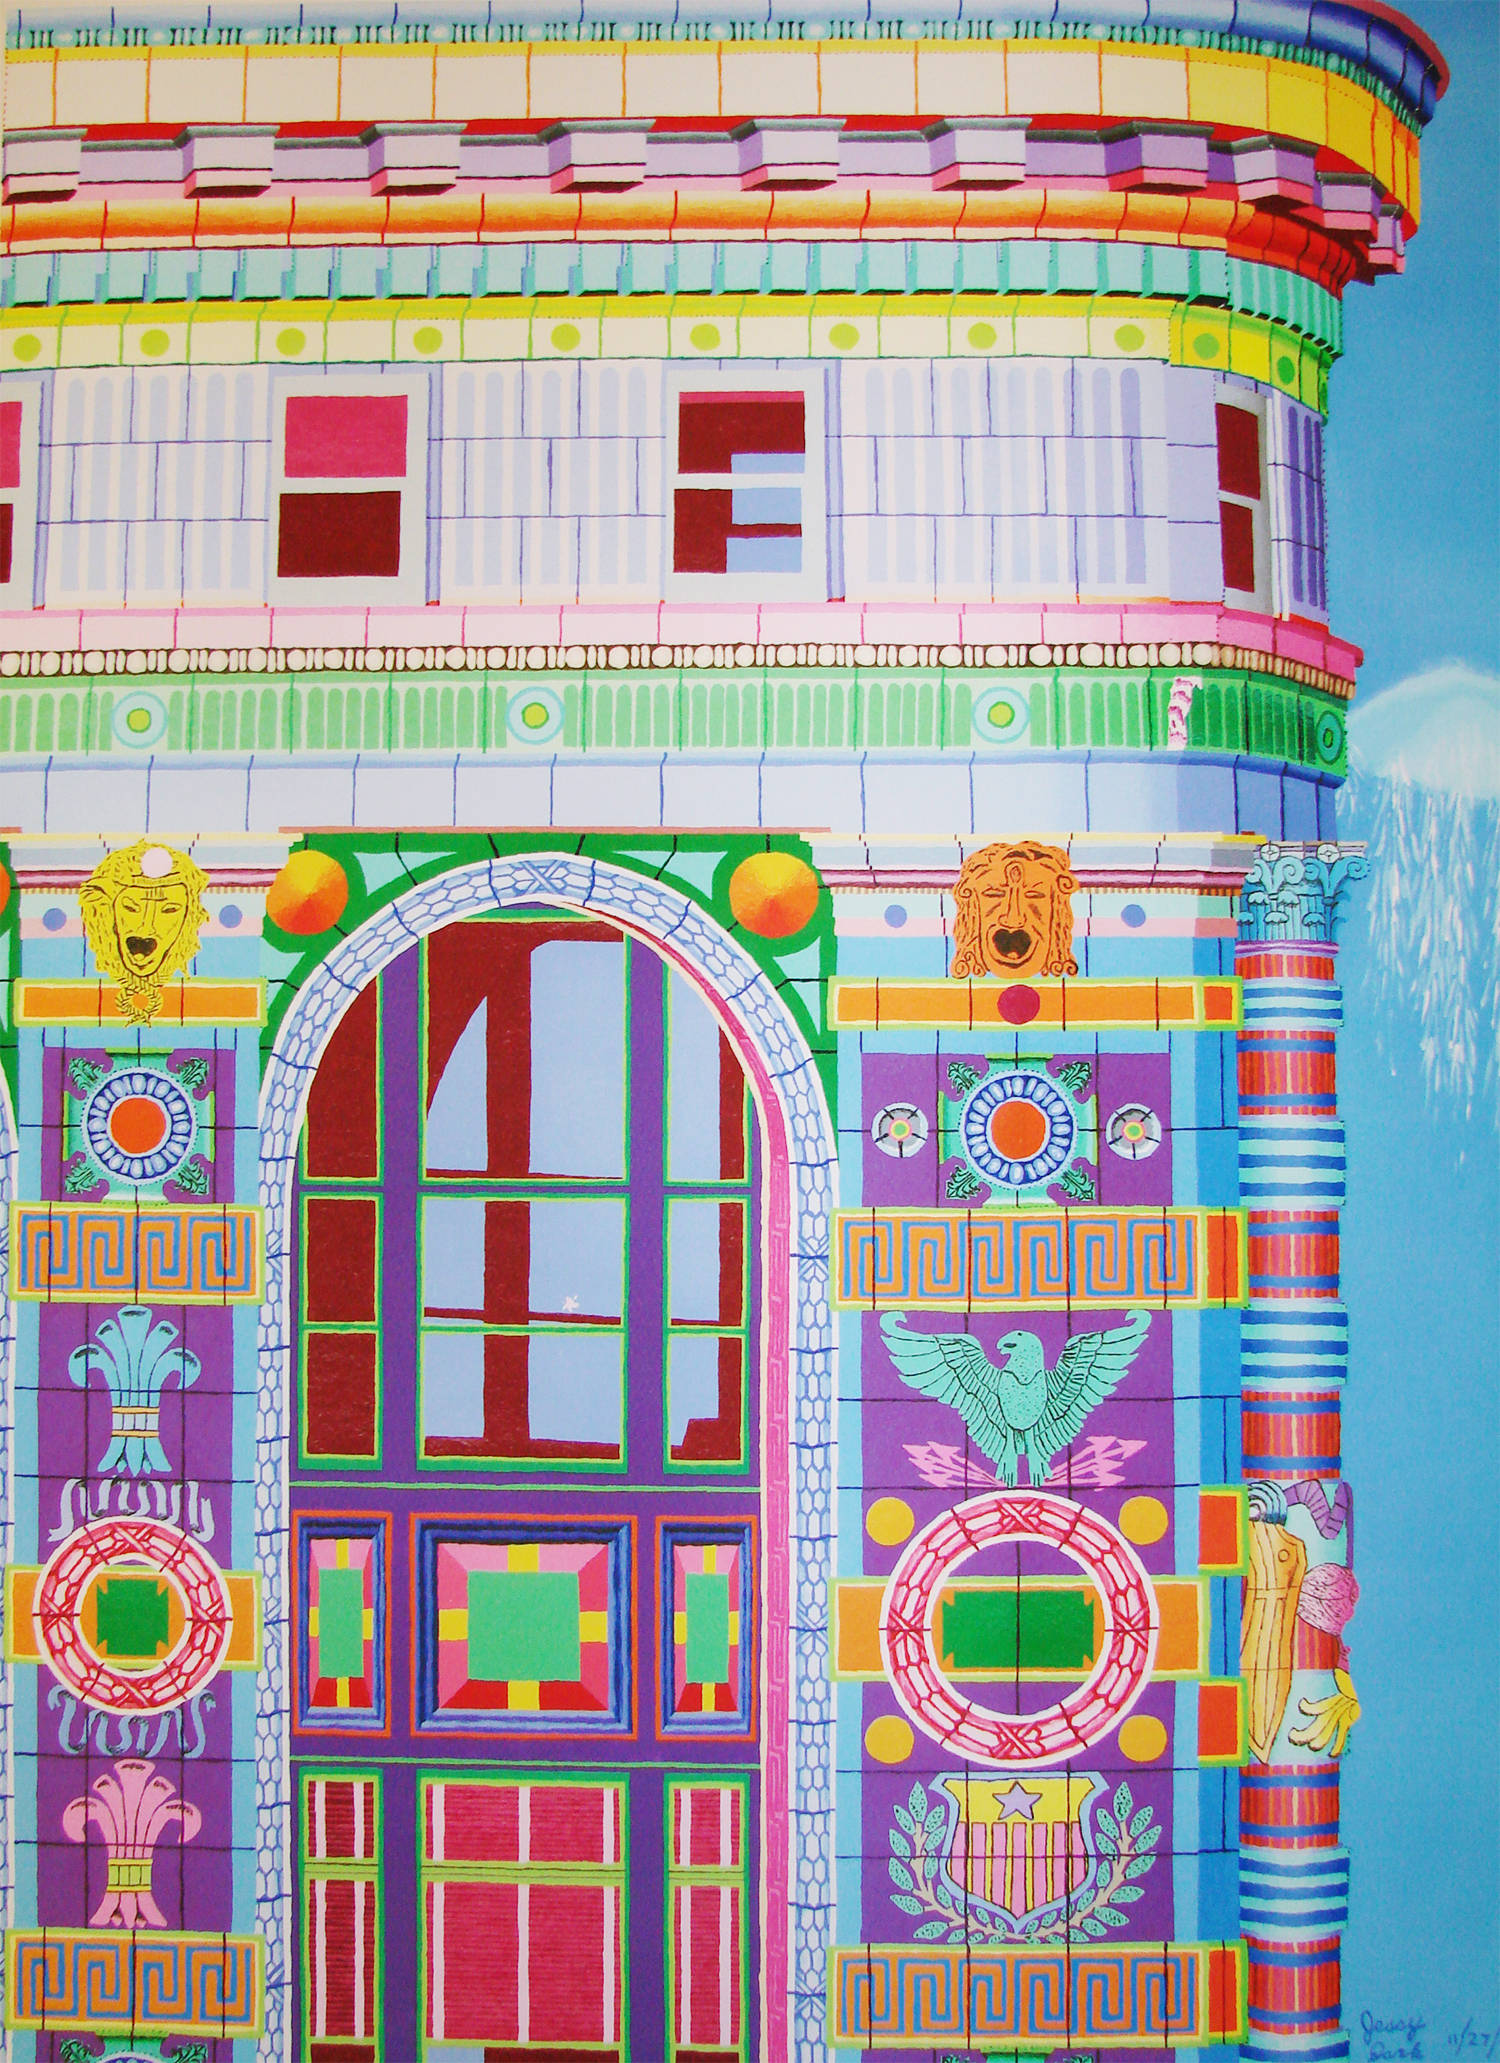 Flatiron Building by jessica park, autistic artist